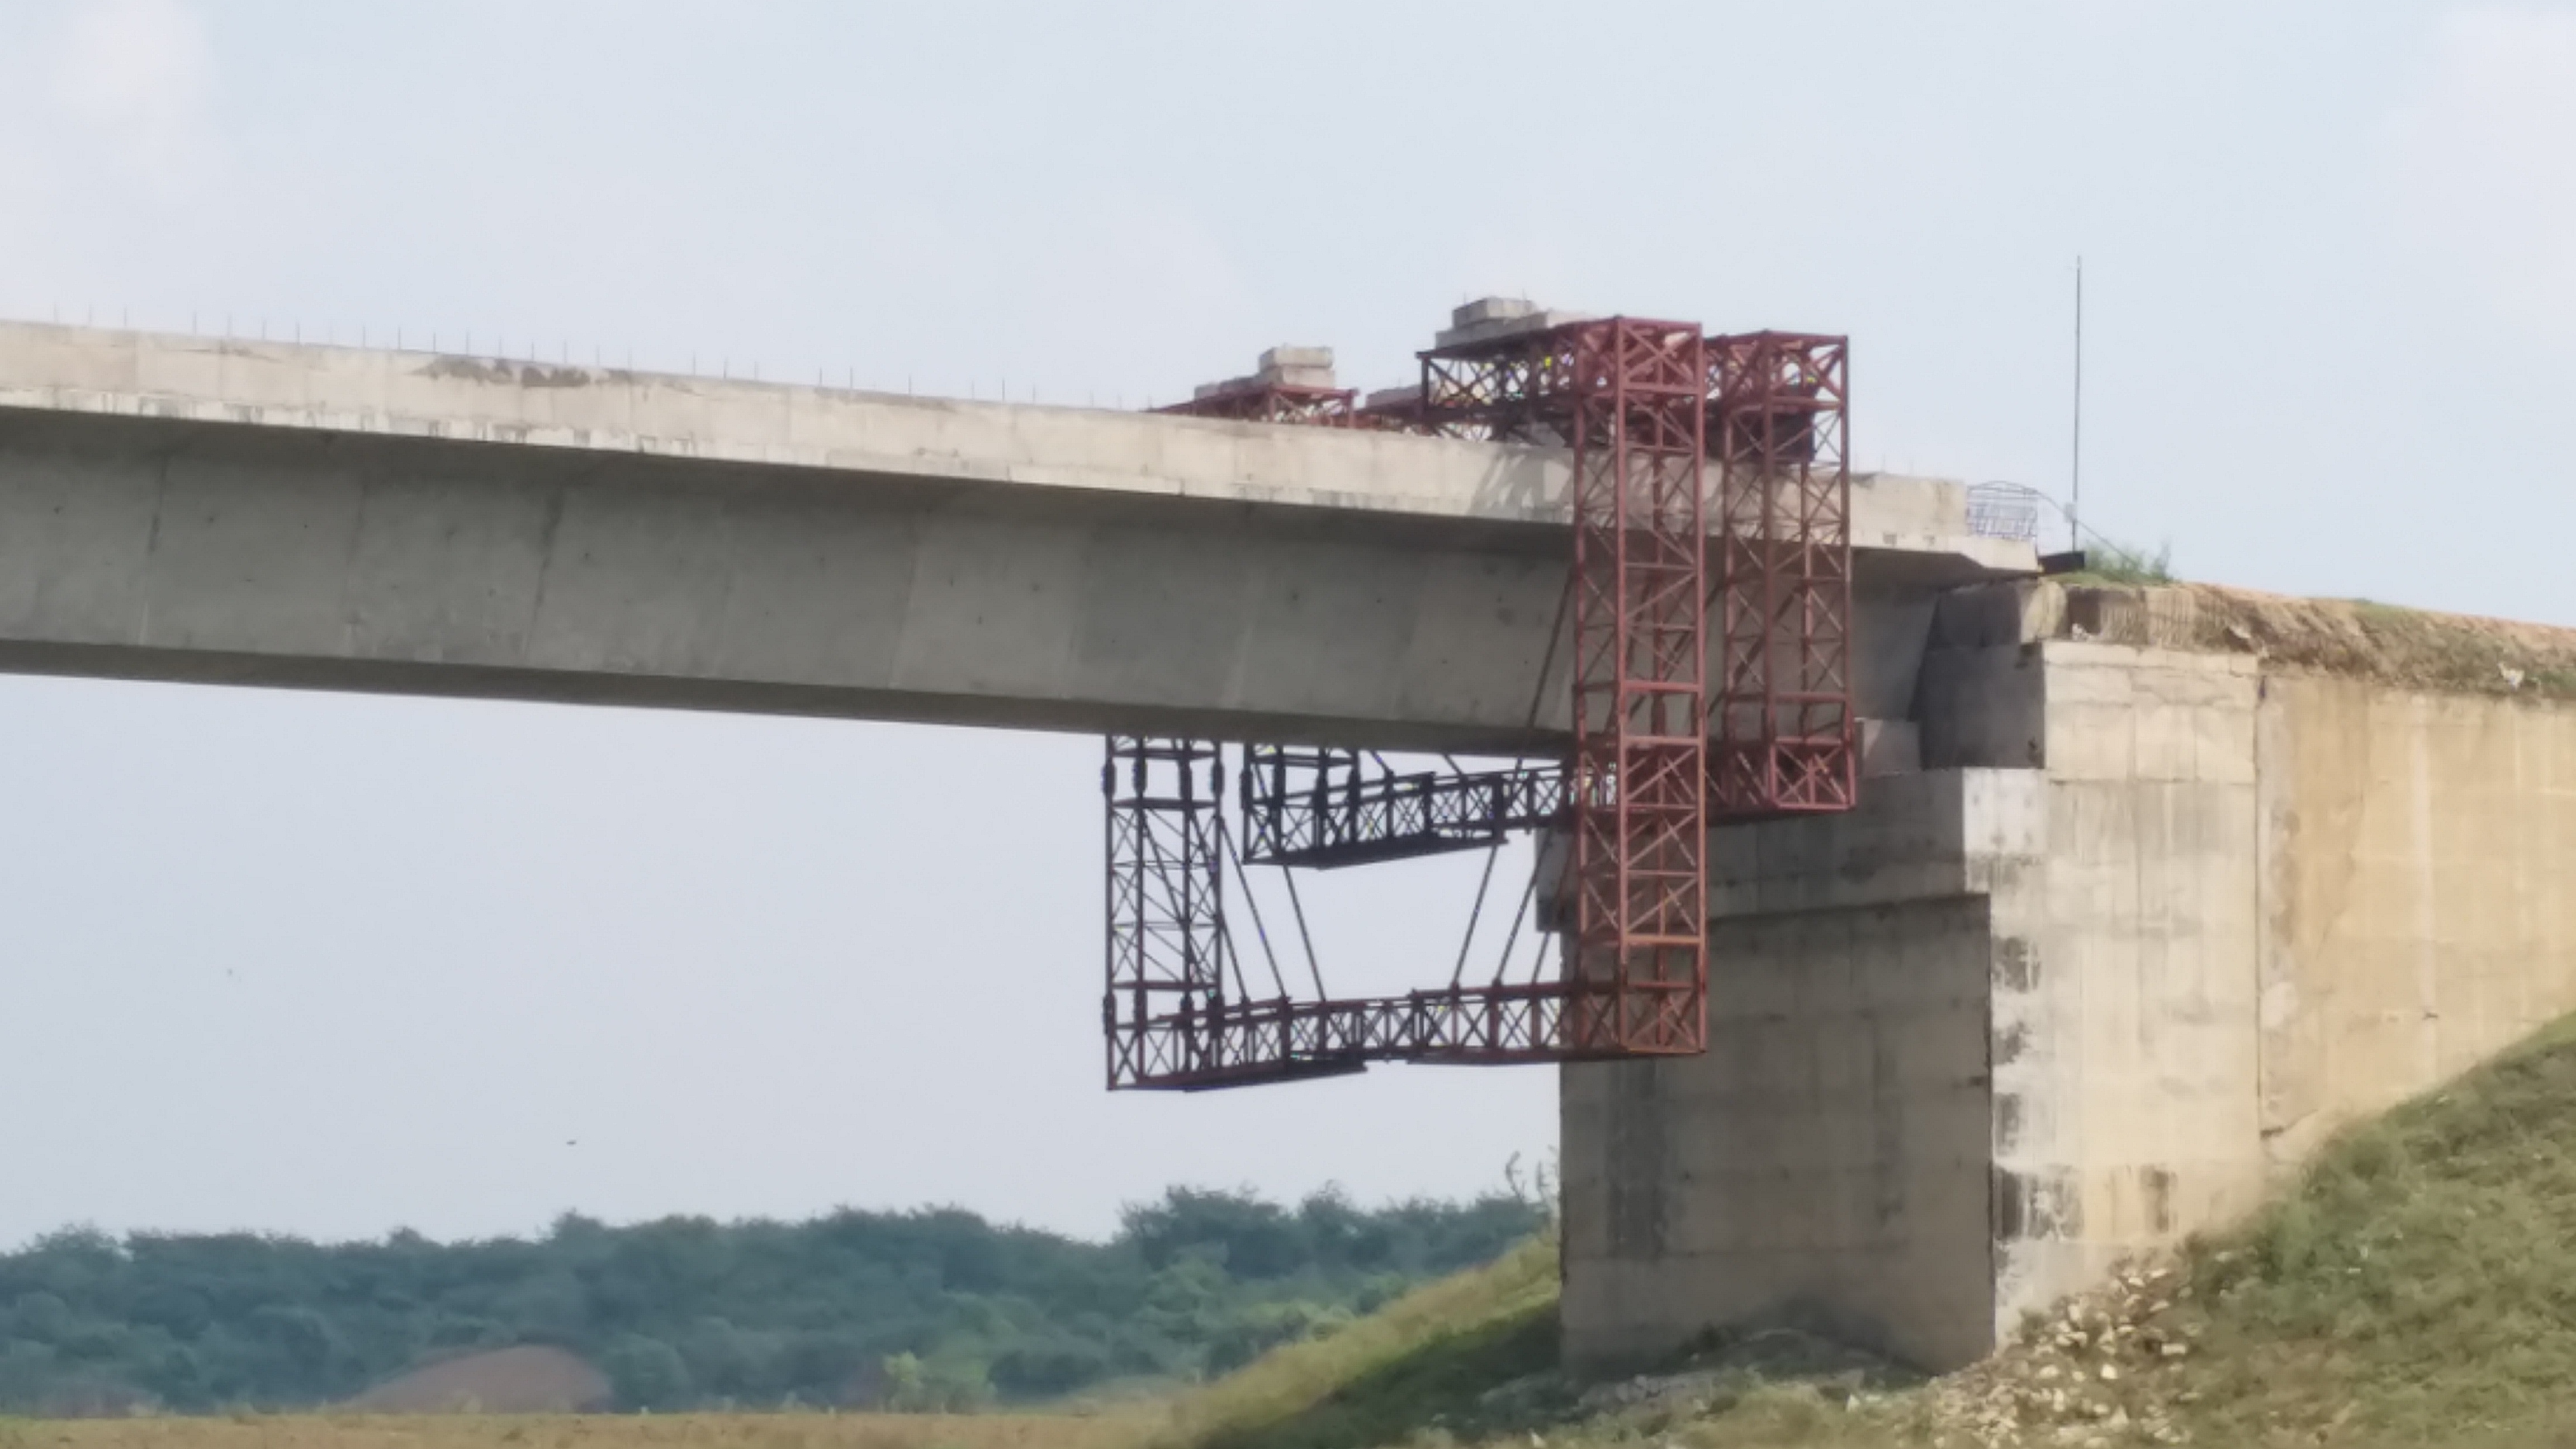 chambal bridge revise senction clash